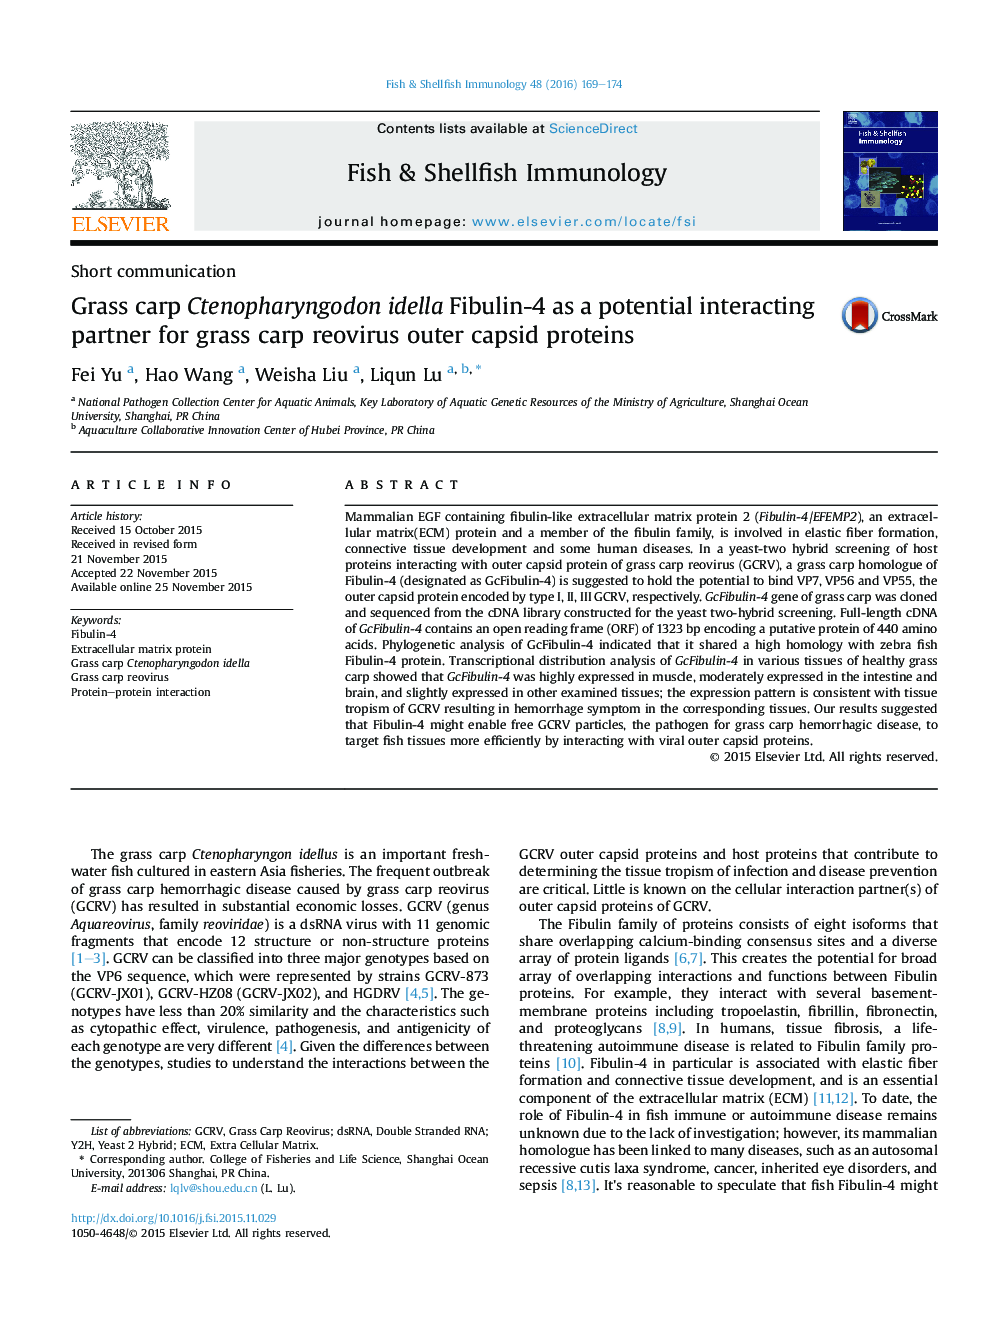 Grass carp Ctenopharyngodon idella Fibulin-4 as a potential interacting partner for grass carp reovirus outer capsid proteins